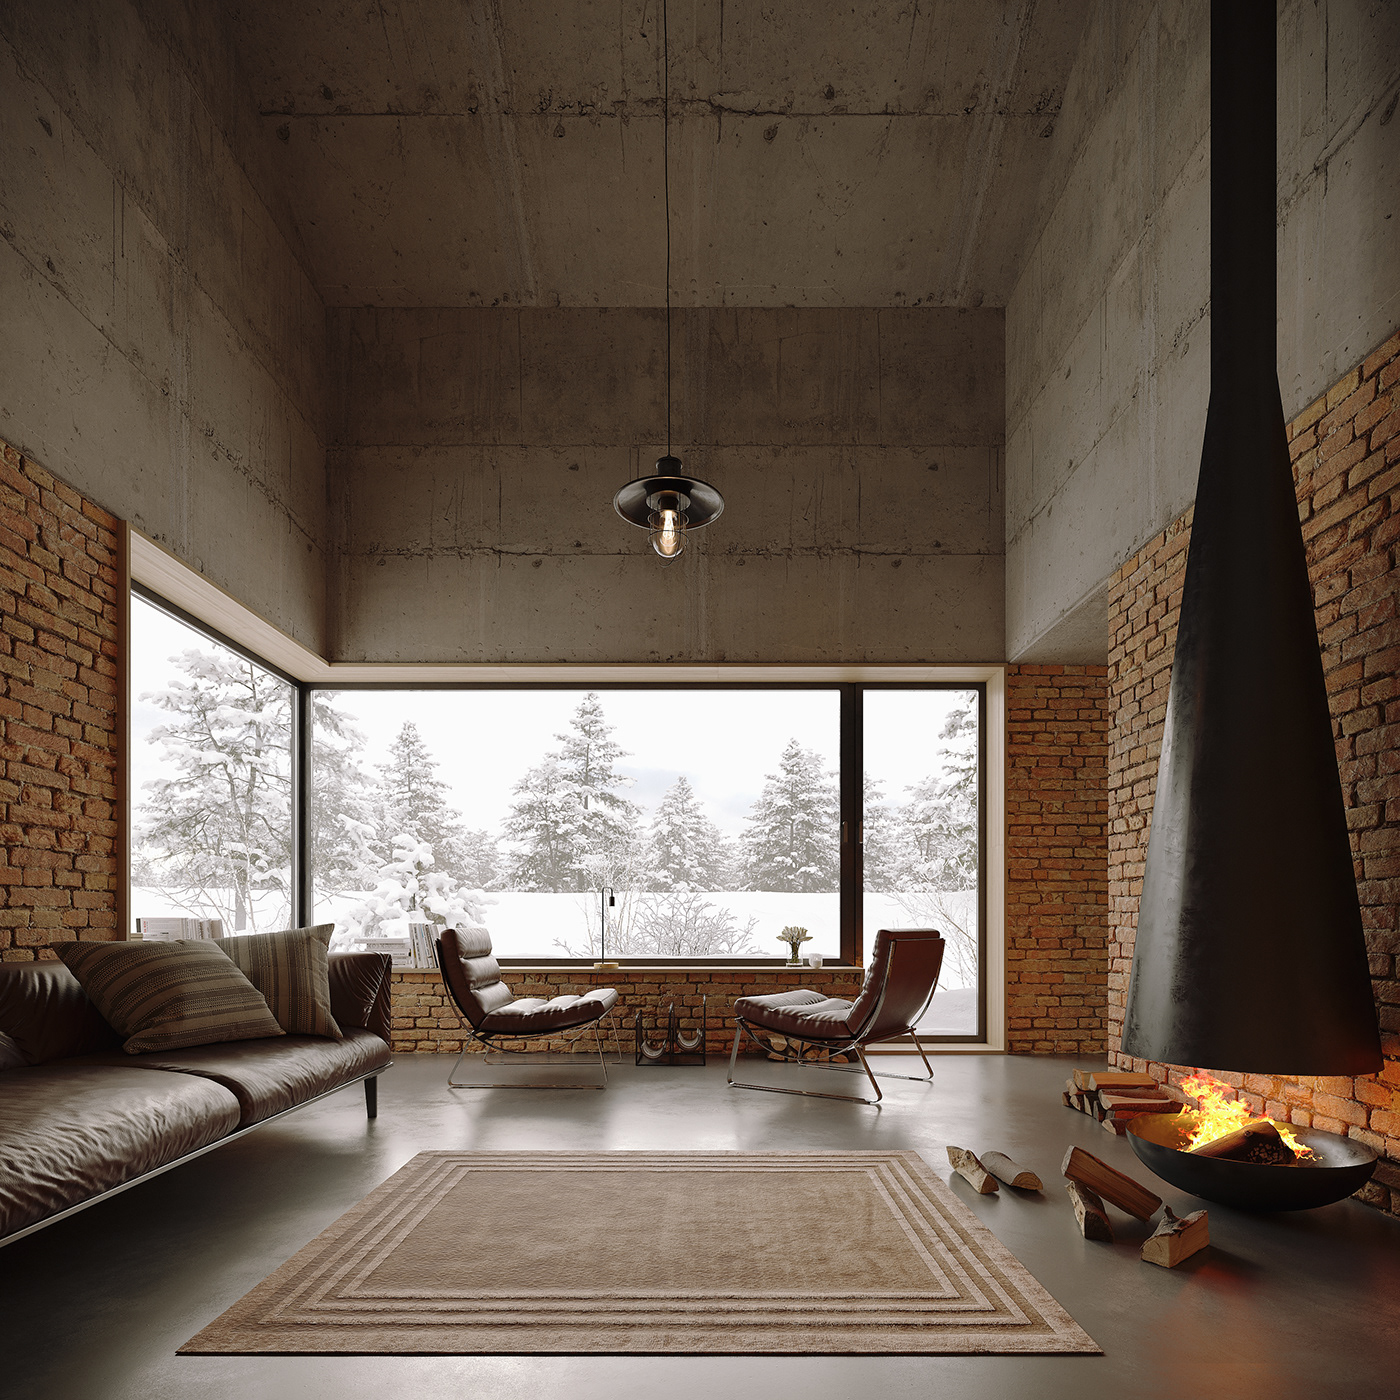 architecture archviz CGI exterior interior design  Render snow Villa visualization winter